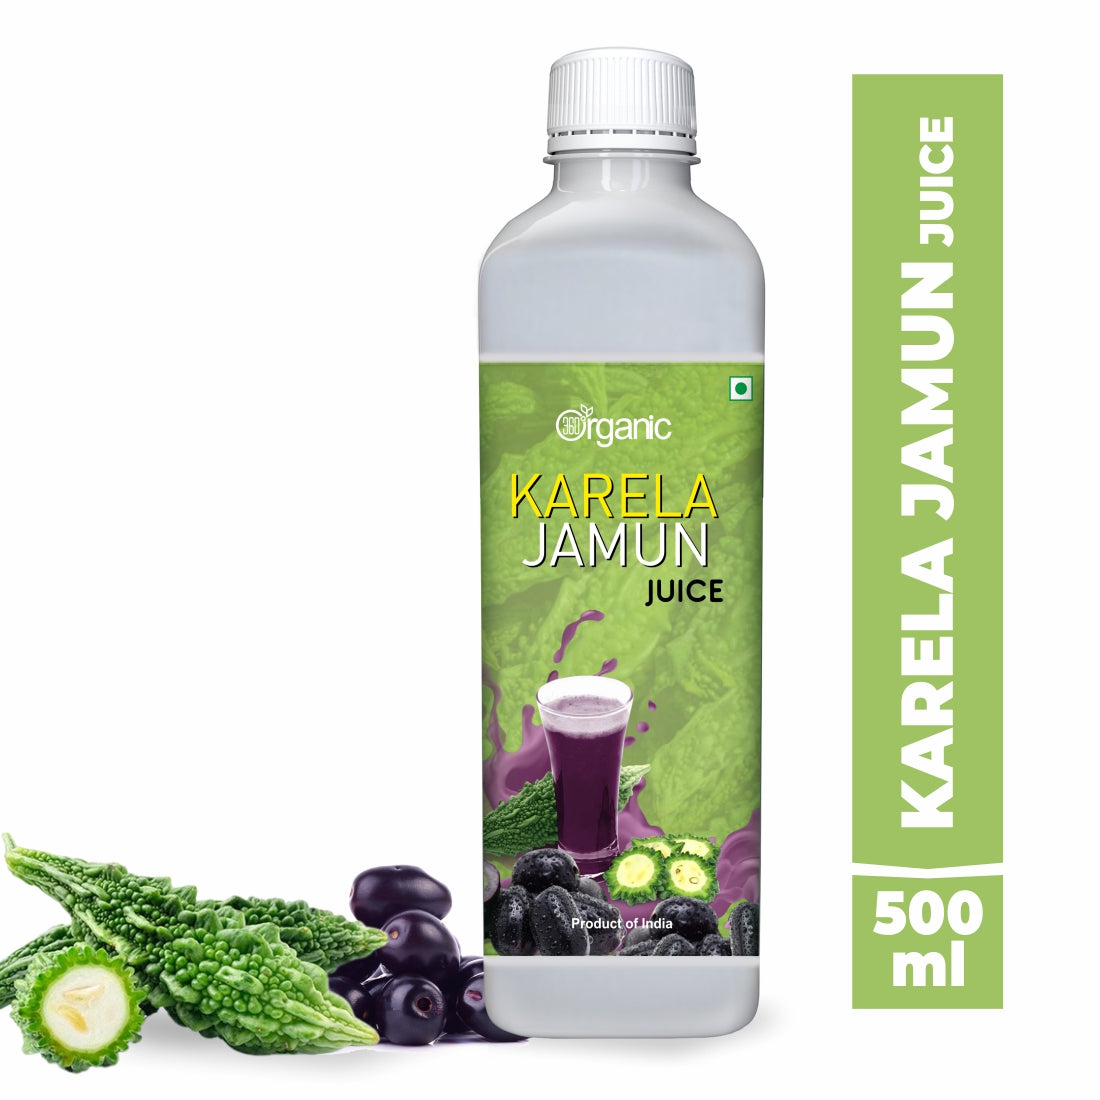 360 Degree Organic Karela Jamun Juice for Controls Blood Sugar Levels  Fights Cholesterol  Helps Improves Digestion  Helps Build Immunity  Skin Wellness - No Added Sugar - 500 ml